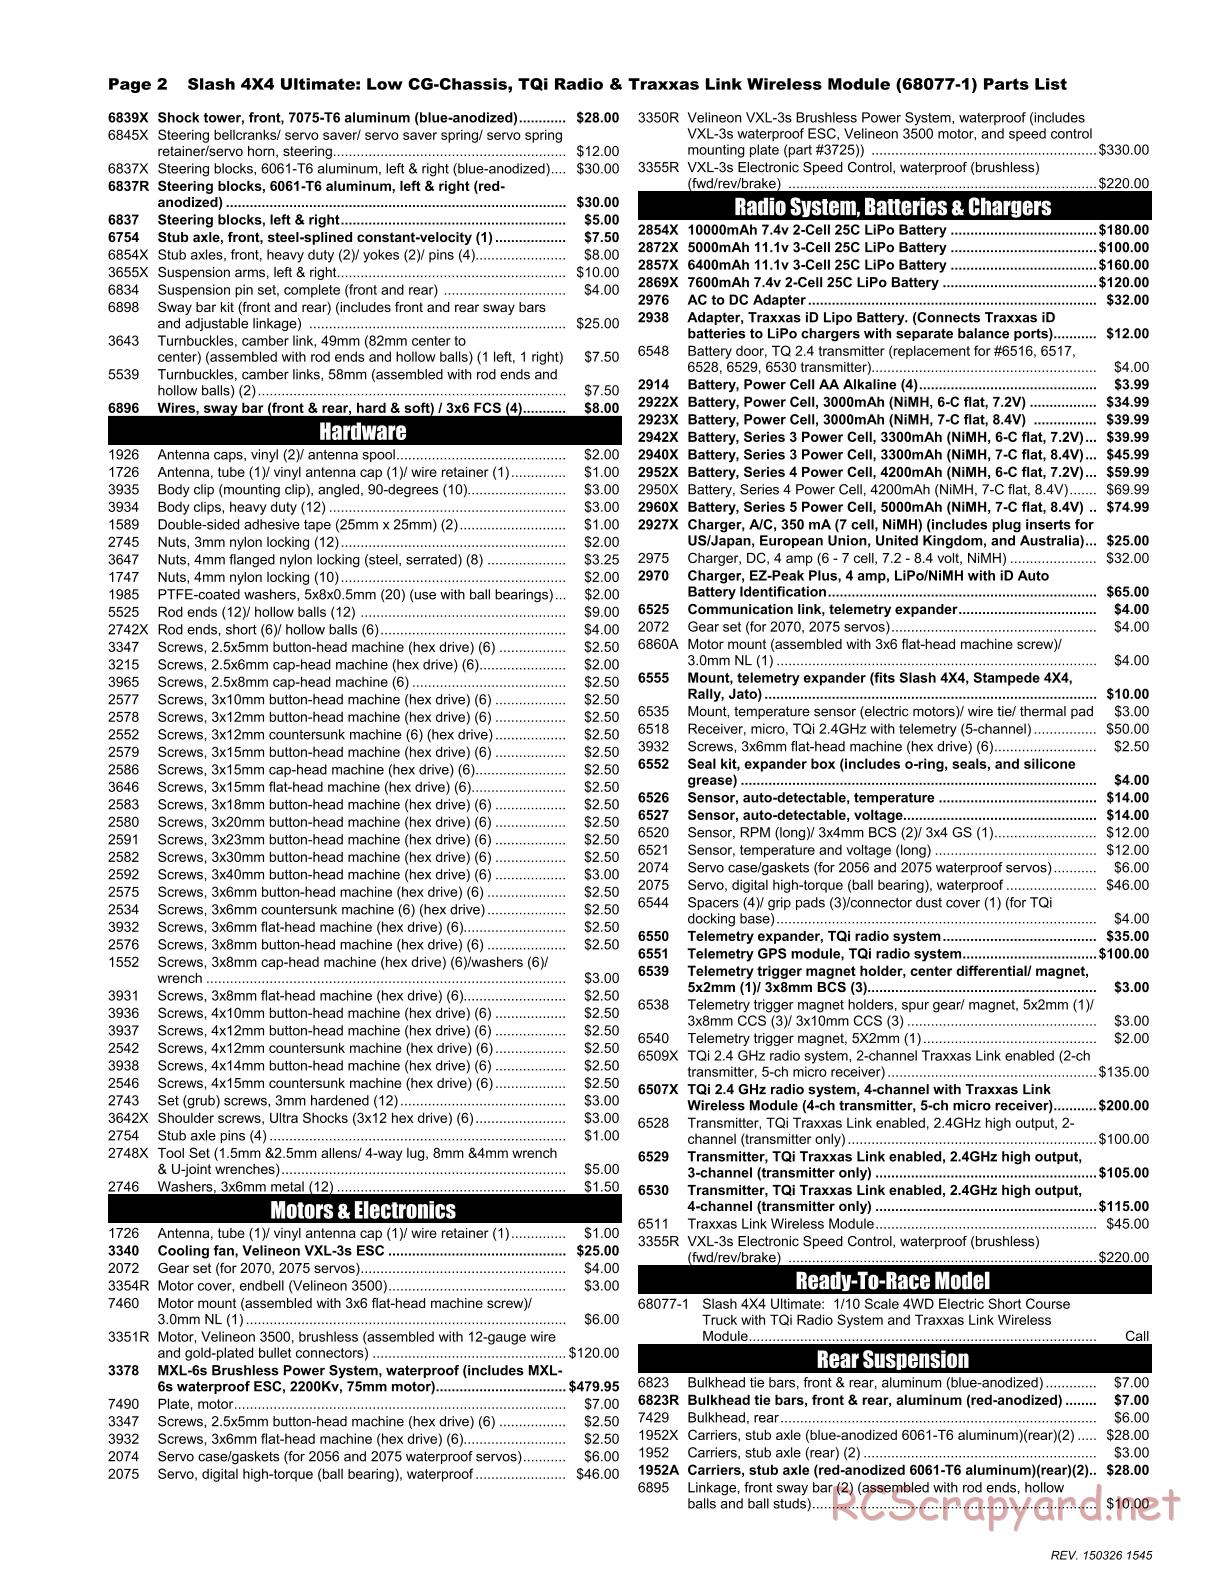 Traxxas - Slash 4x4 Ultimate (2015) - Parts List - Page 2